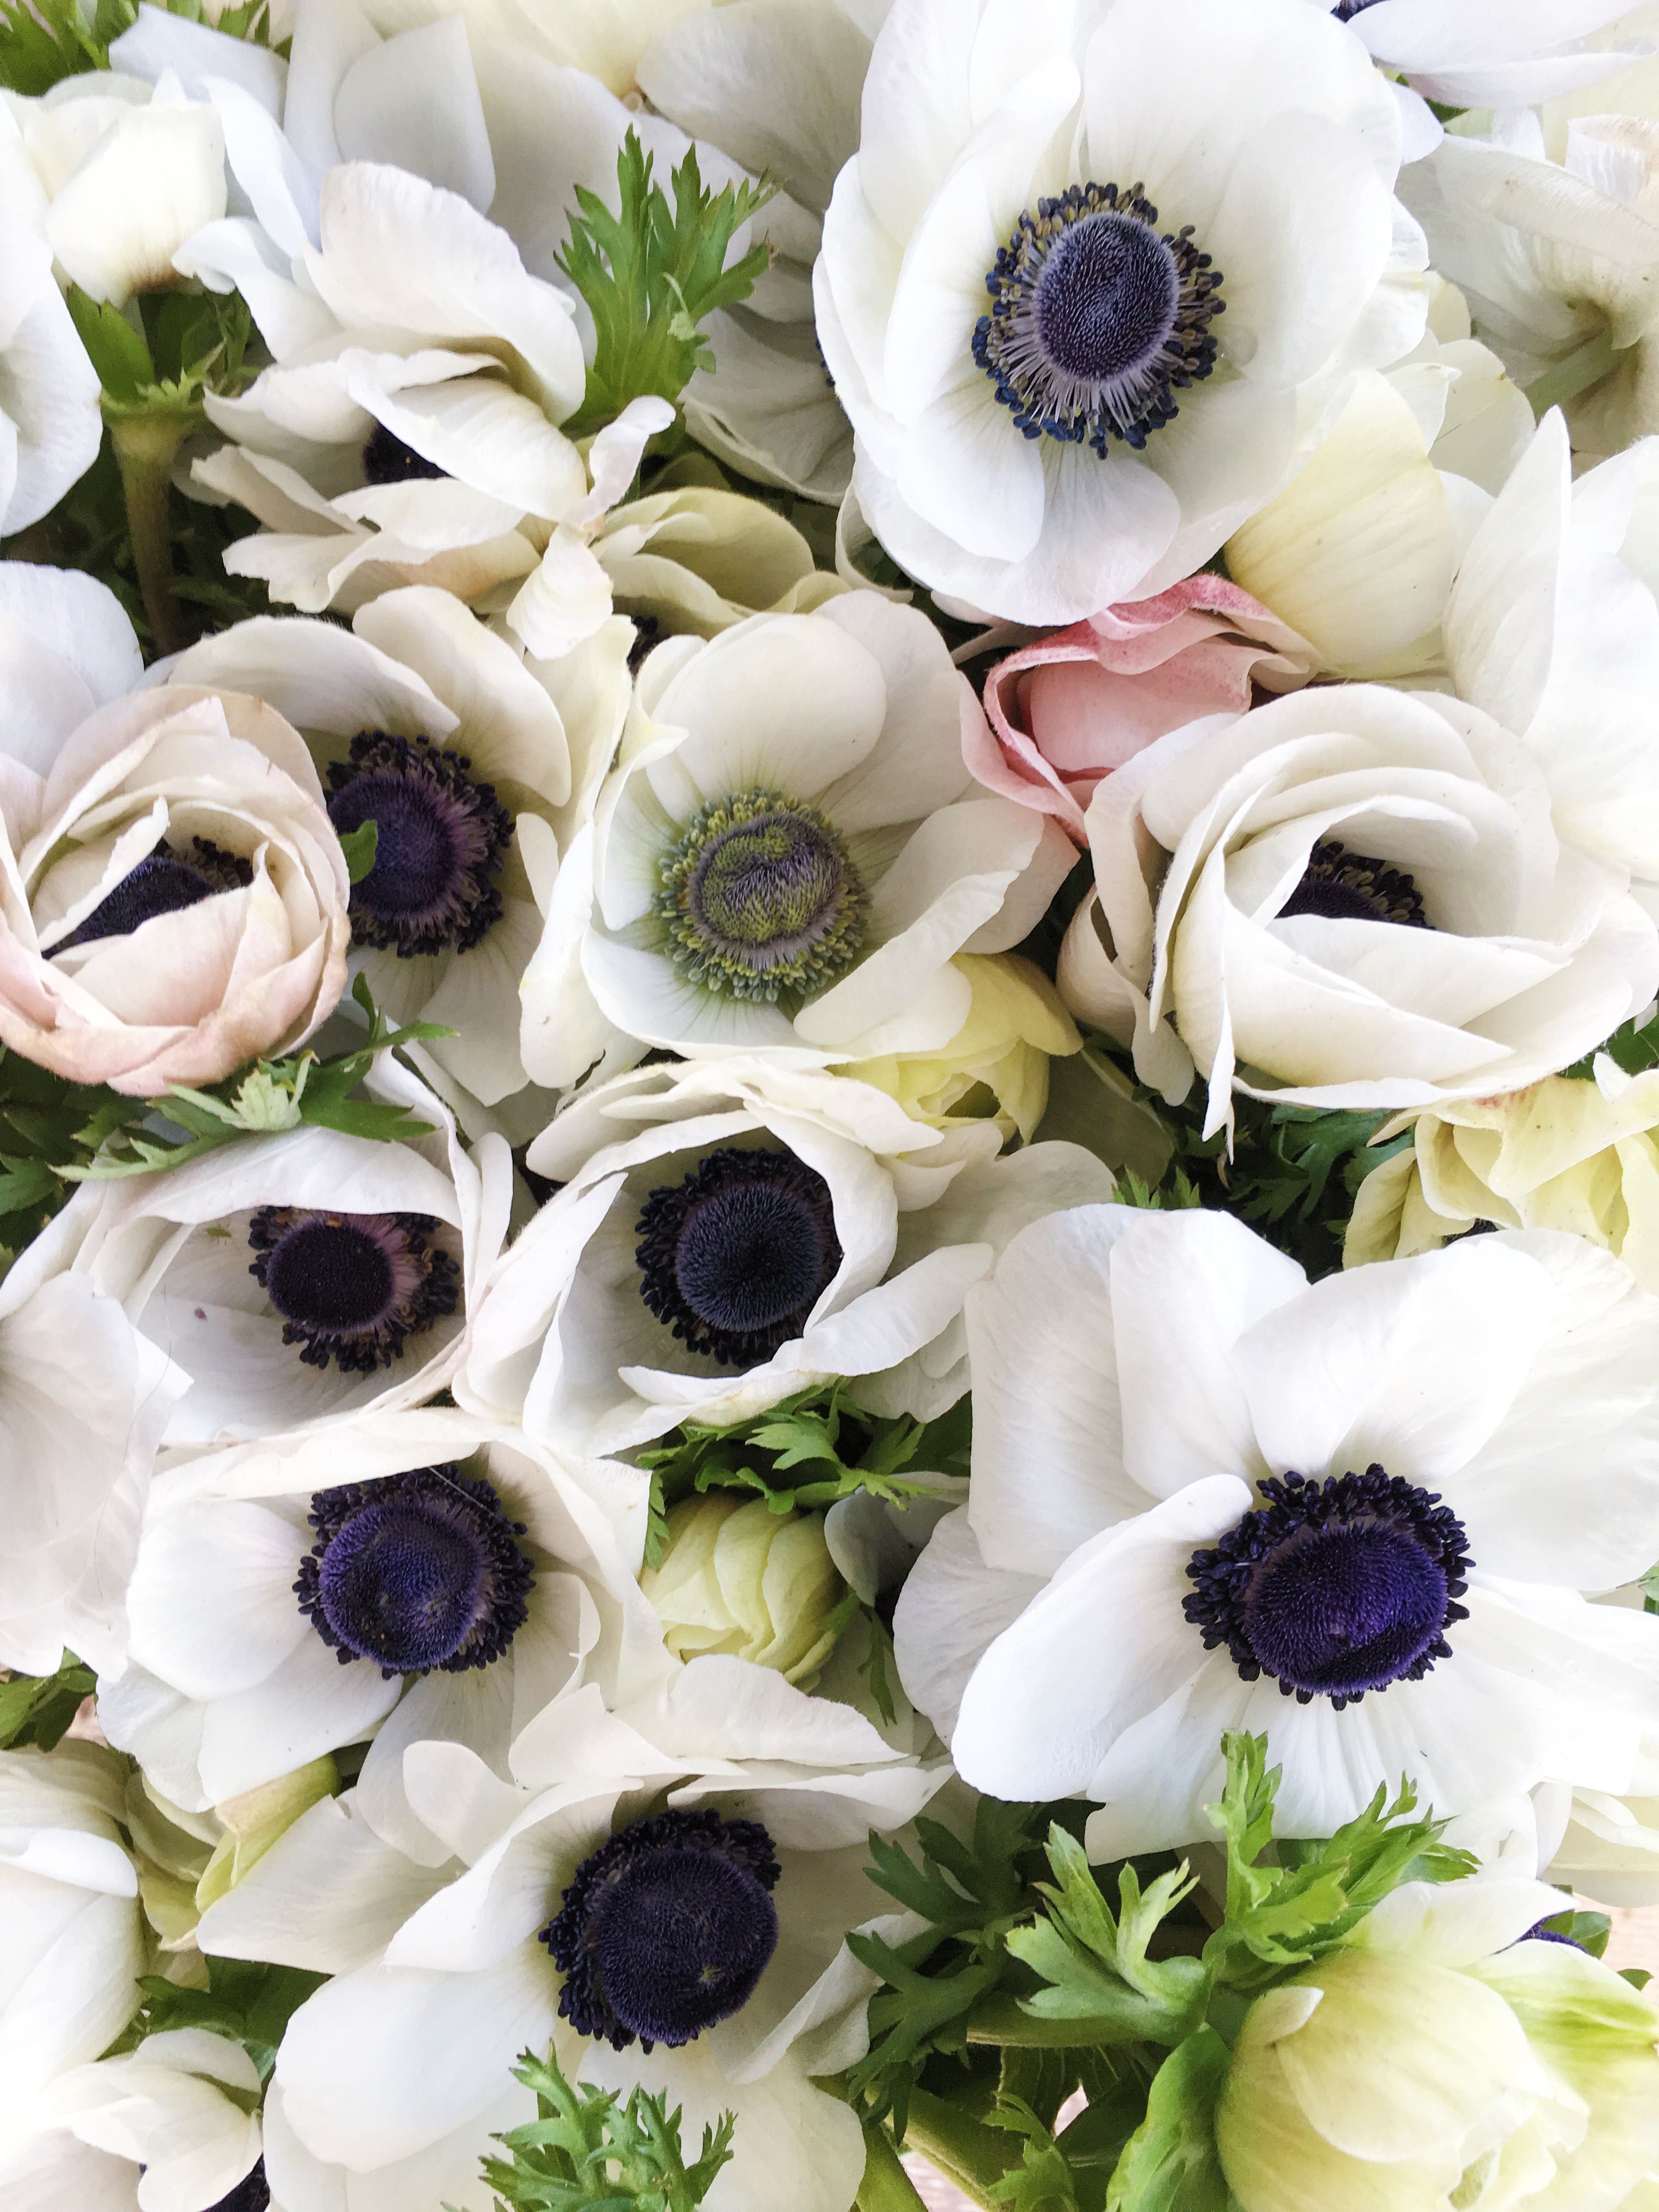 White anemones with black eyes grown at Love 'n Fresh Flowers ...